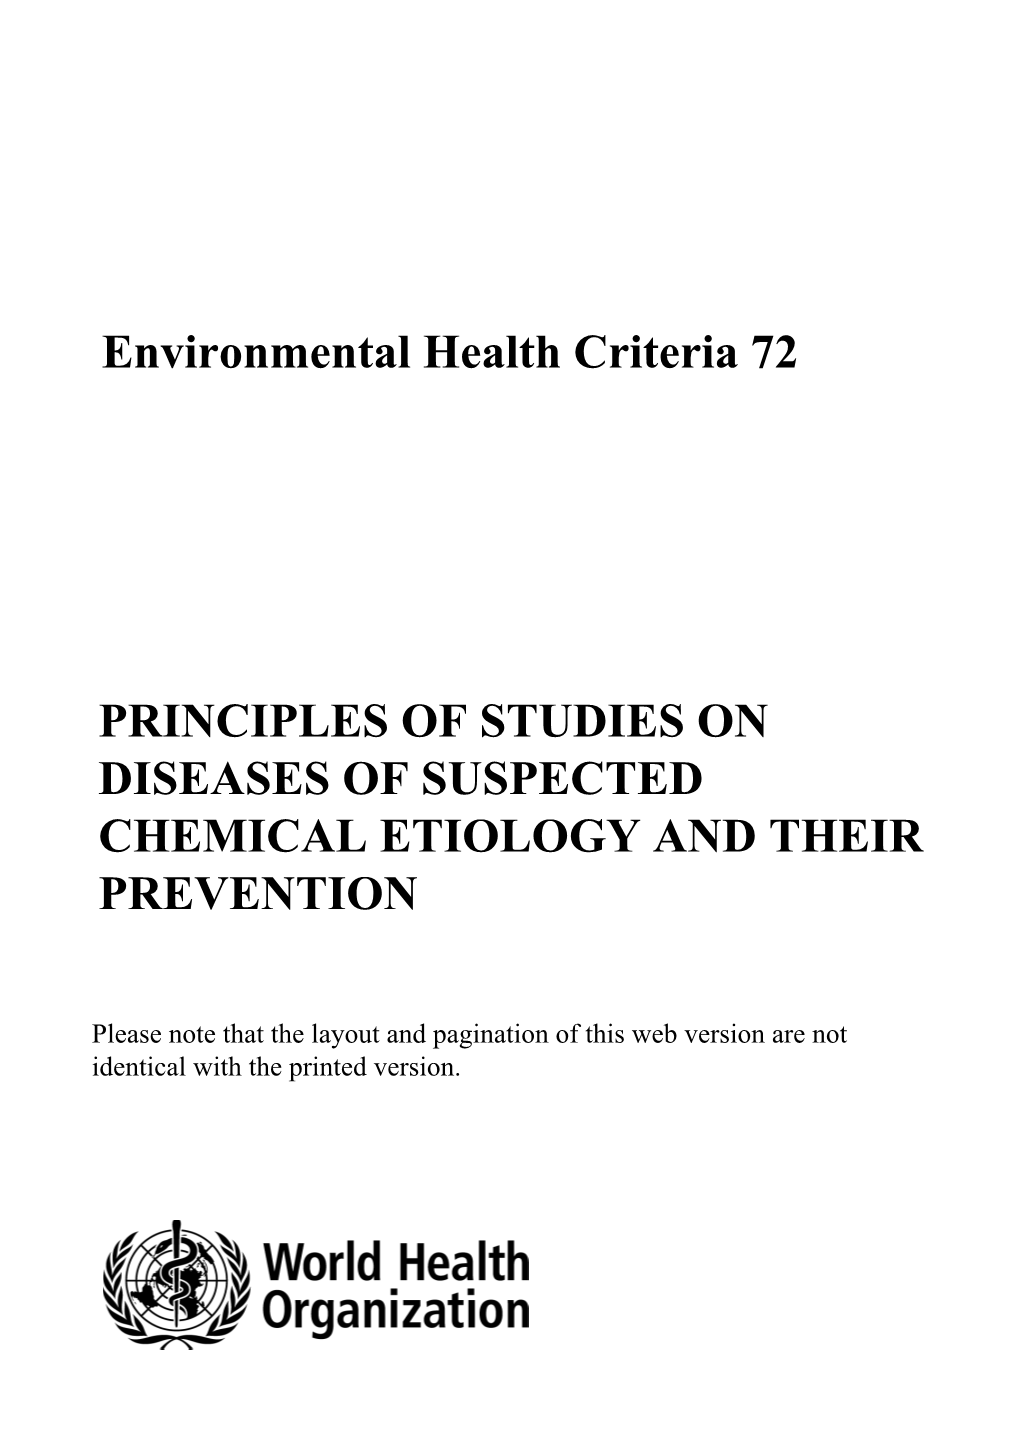 Environmental Health Criteria 72 PRINCIPLES of STUDIES ON